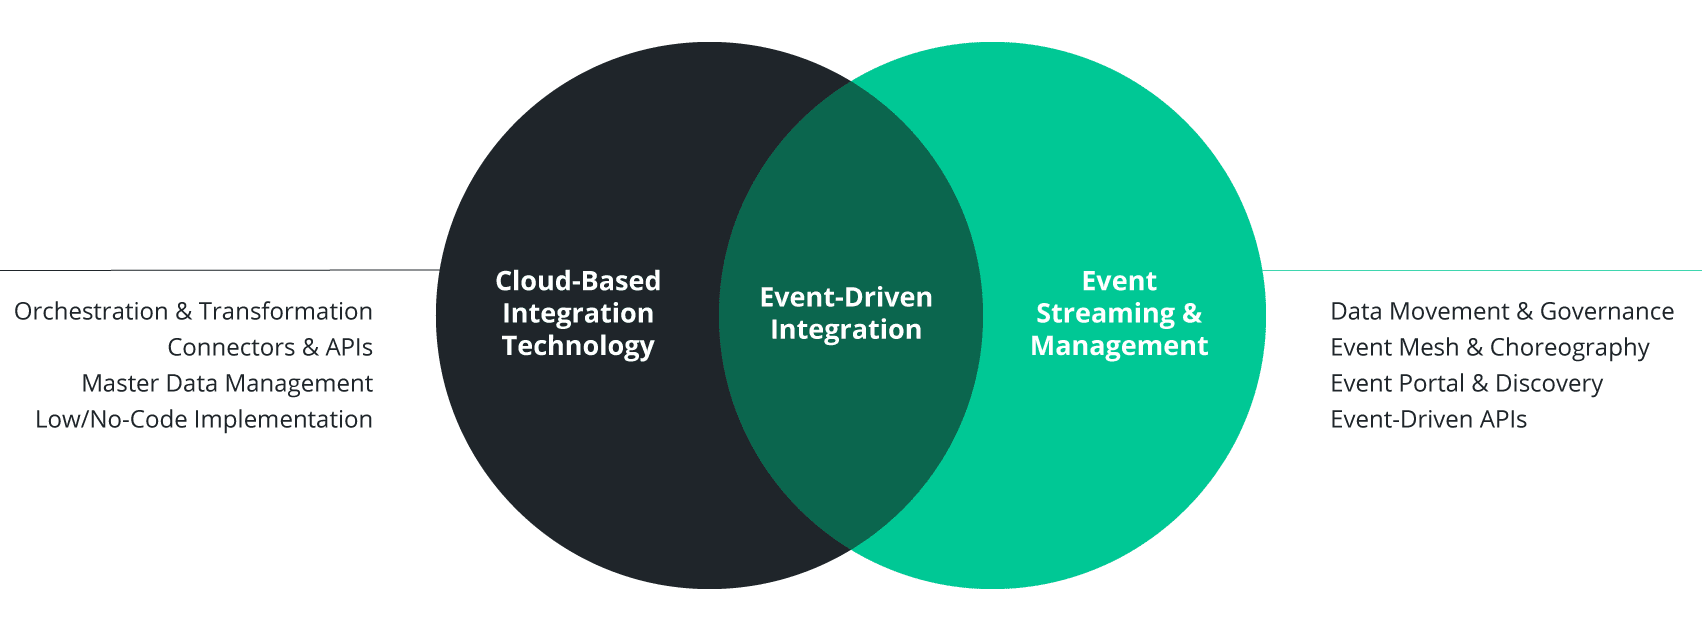 Event-driven integration is an enterprise architecture pattern 